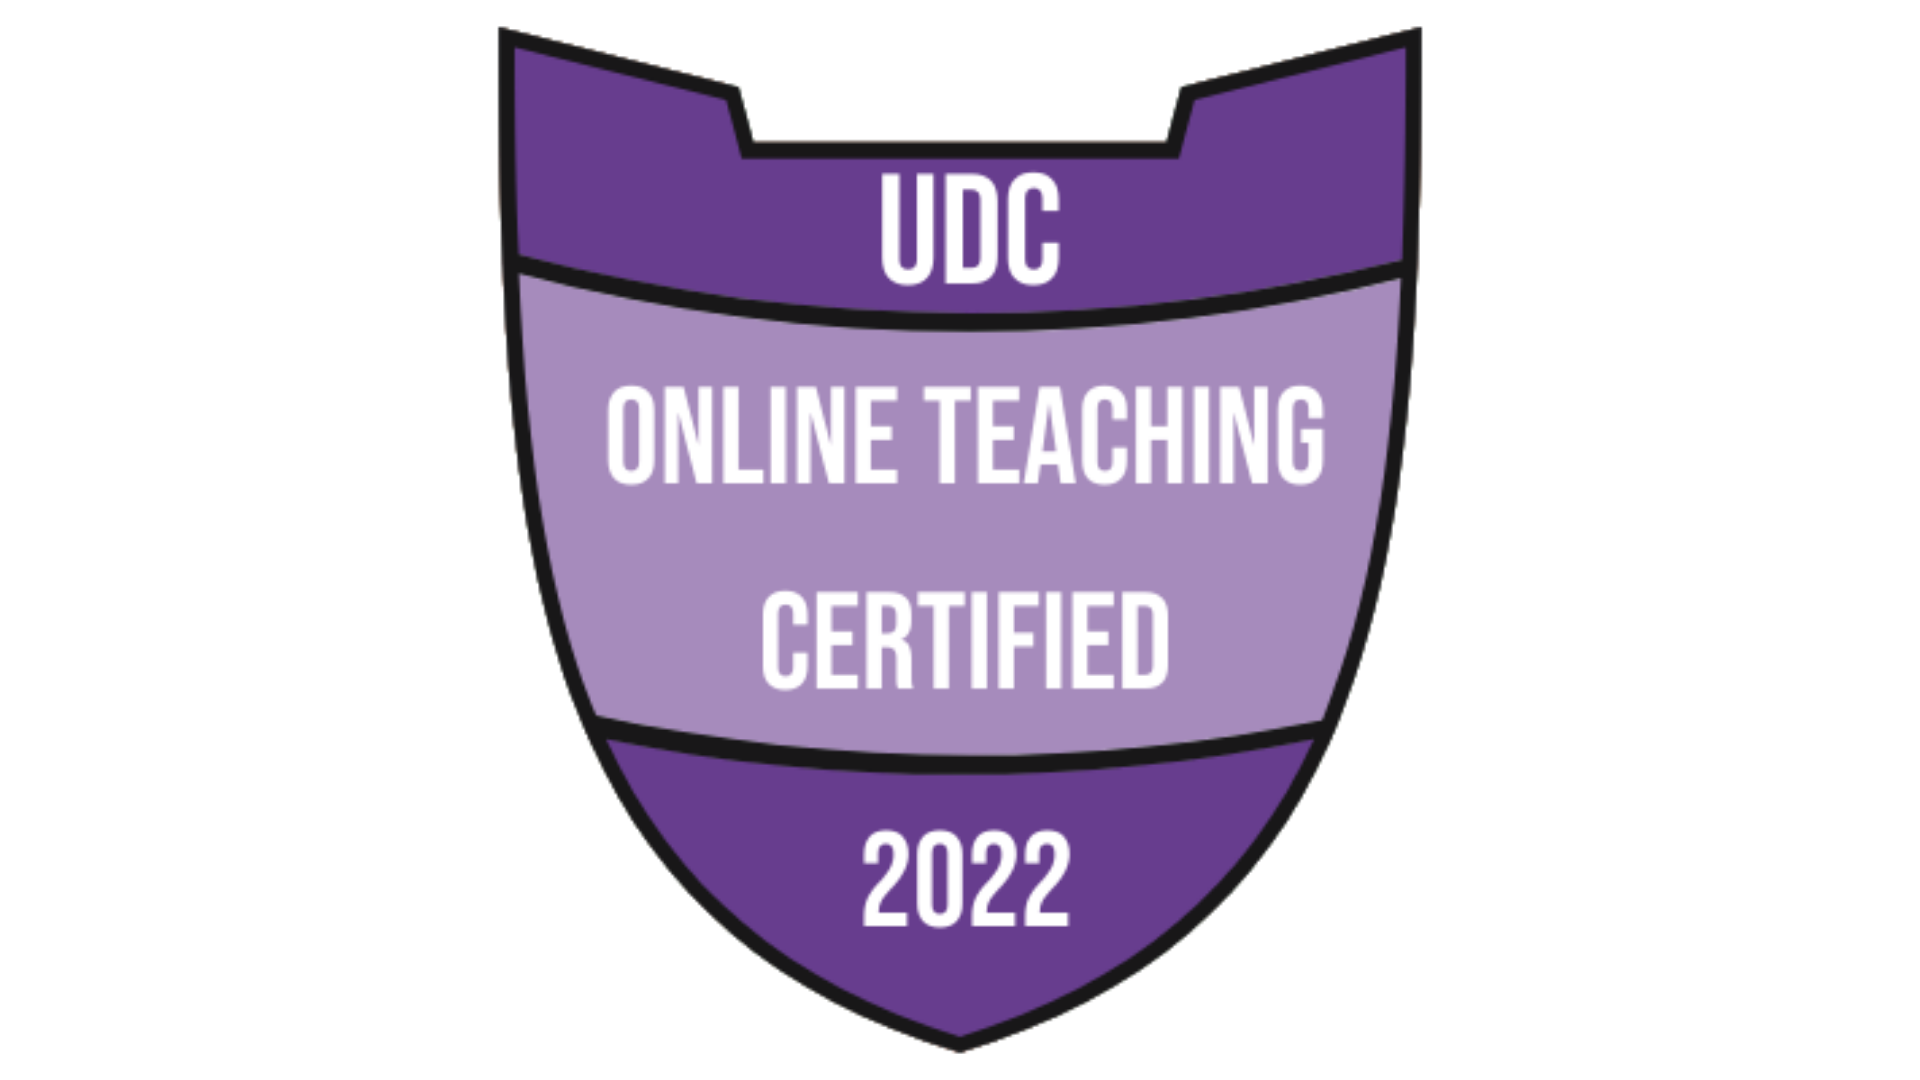 UDC Online Teaching Certified